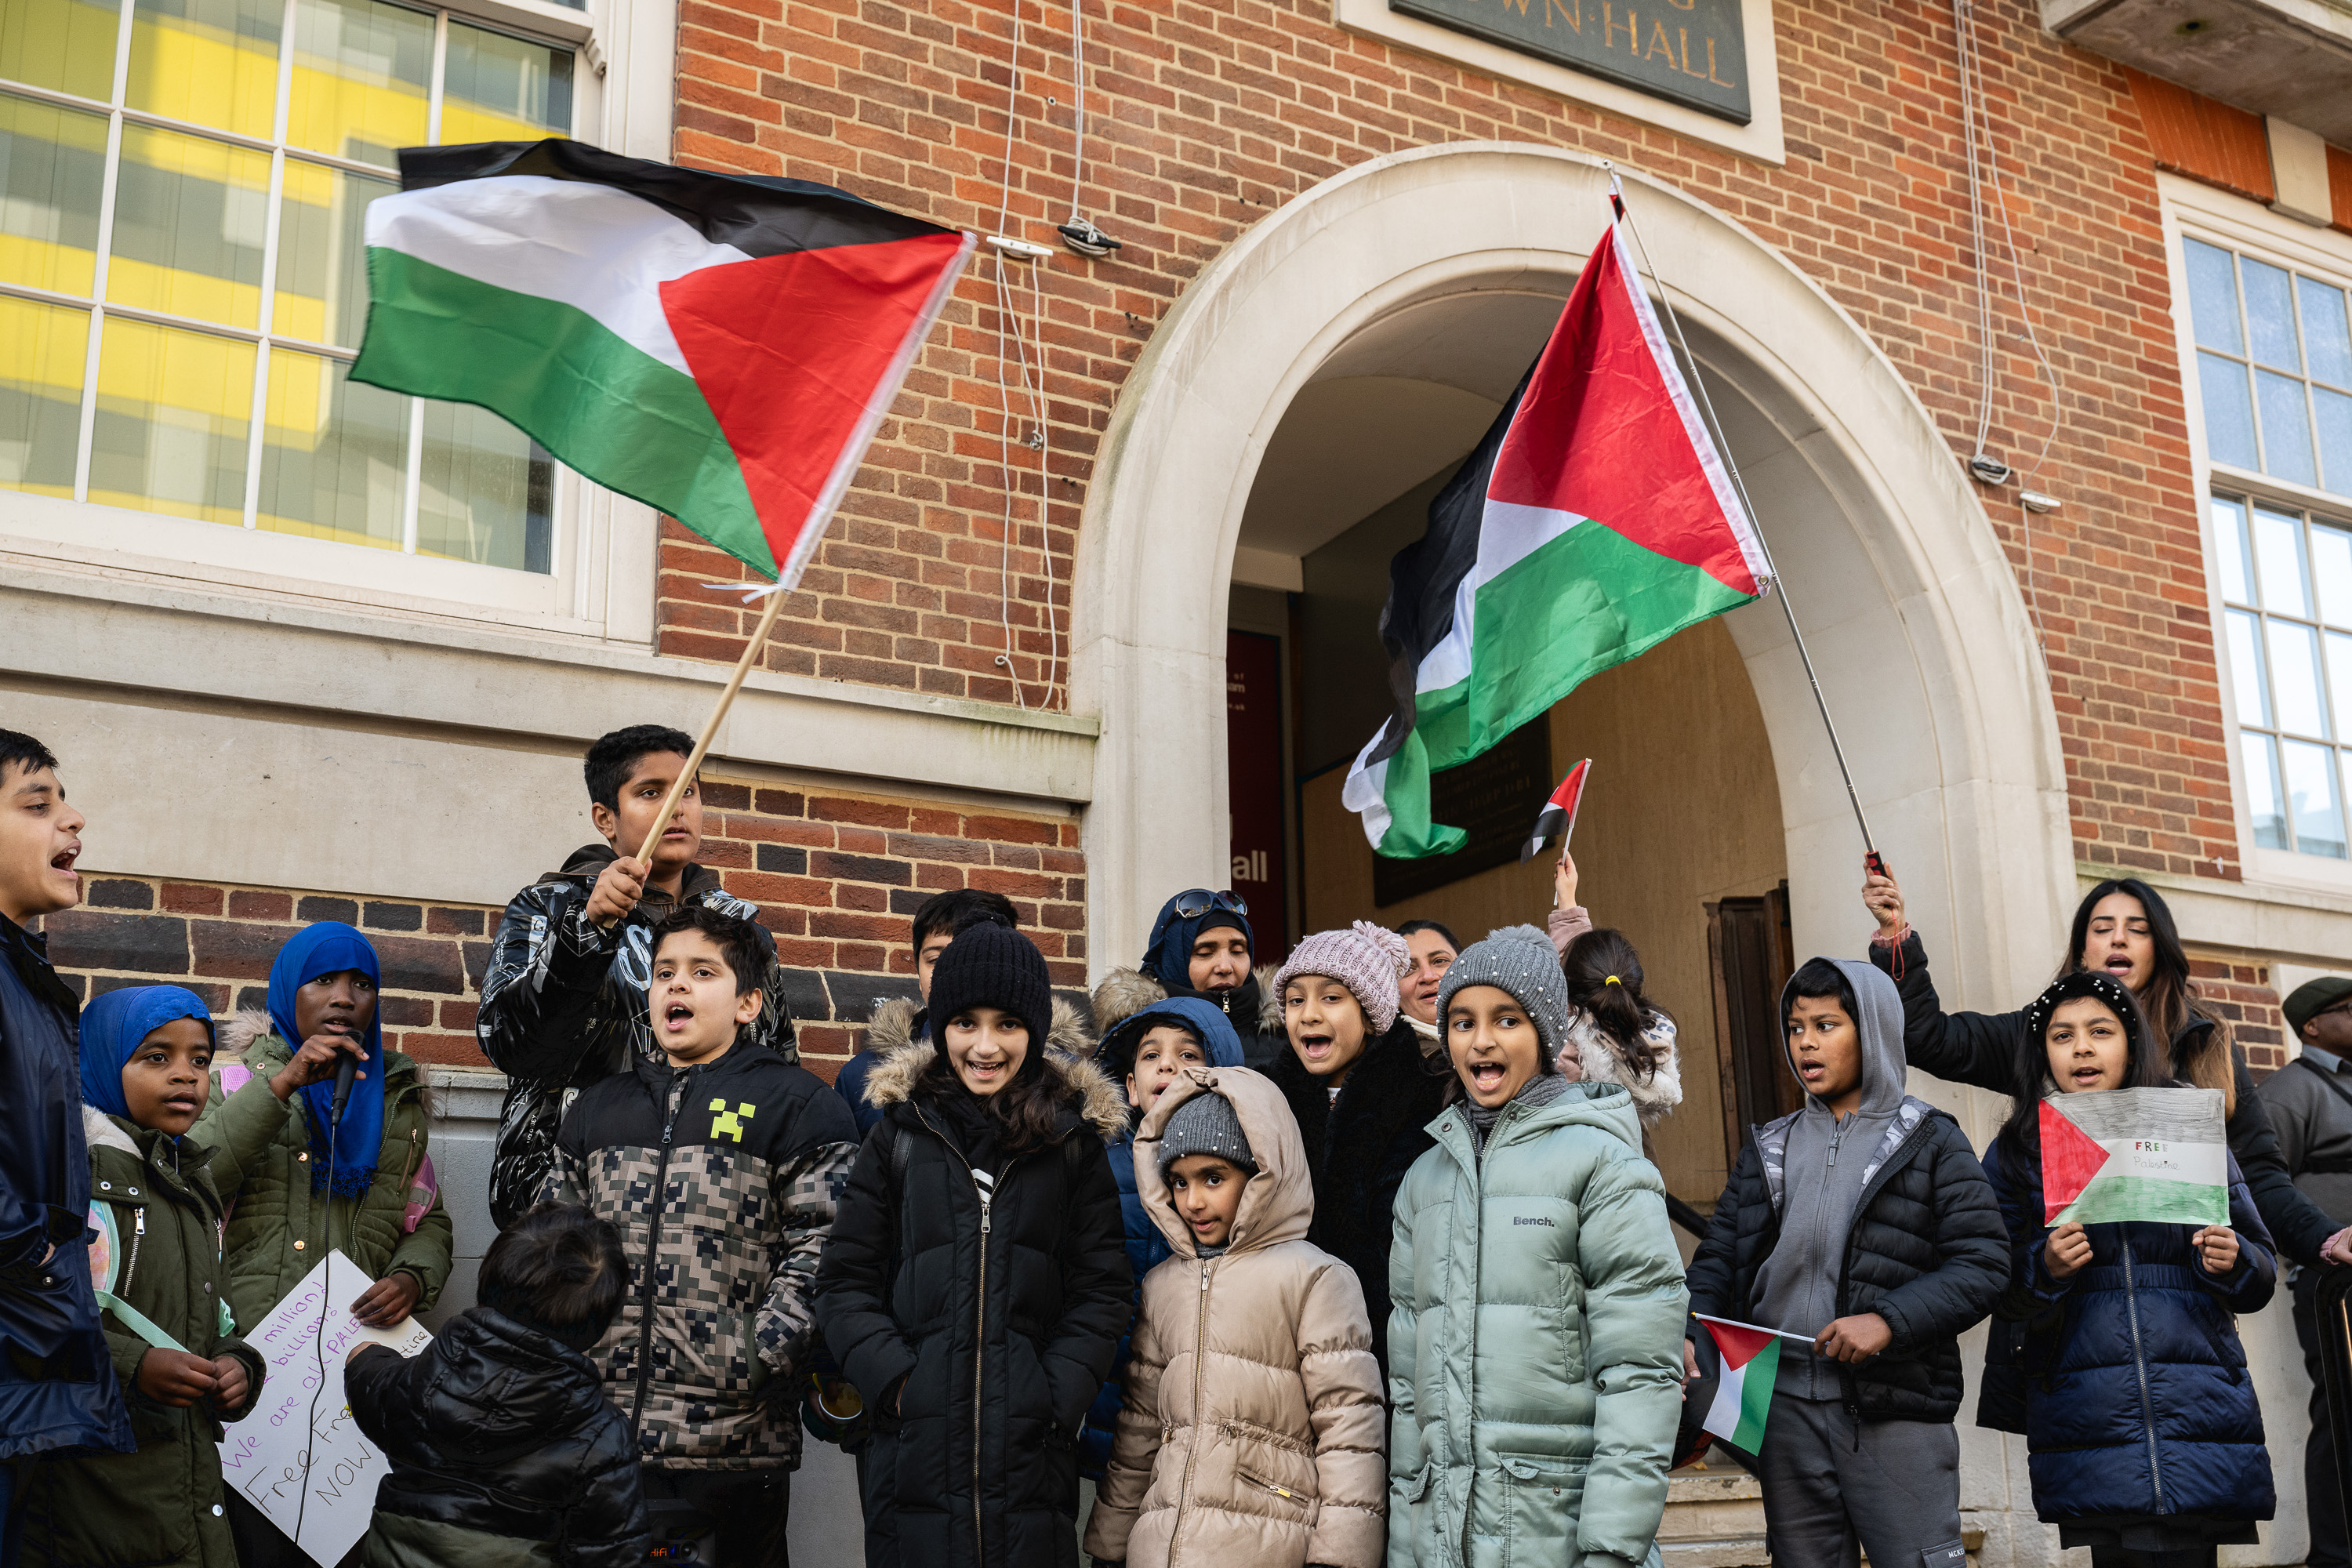 Muslim School Children Receive Sinister Death Threat From Israel Supporter – Newsweek